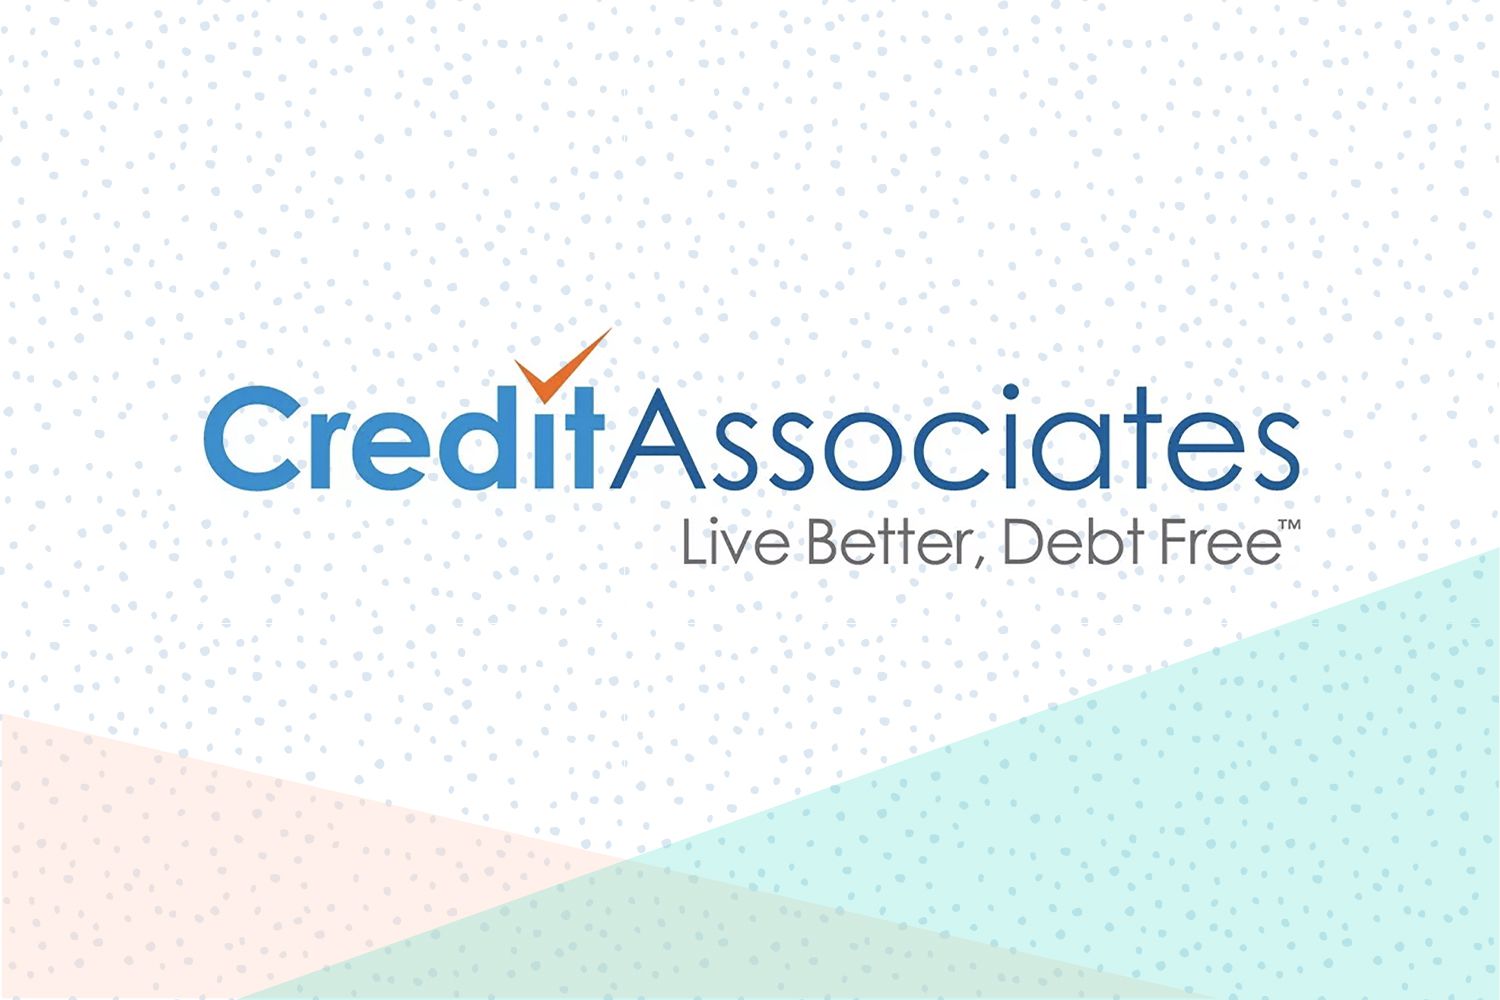 Credit Associates Reviews 